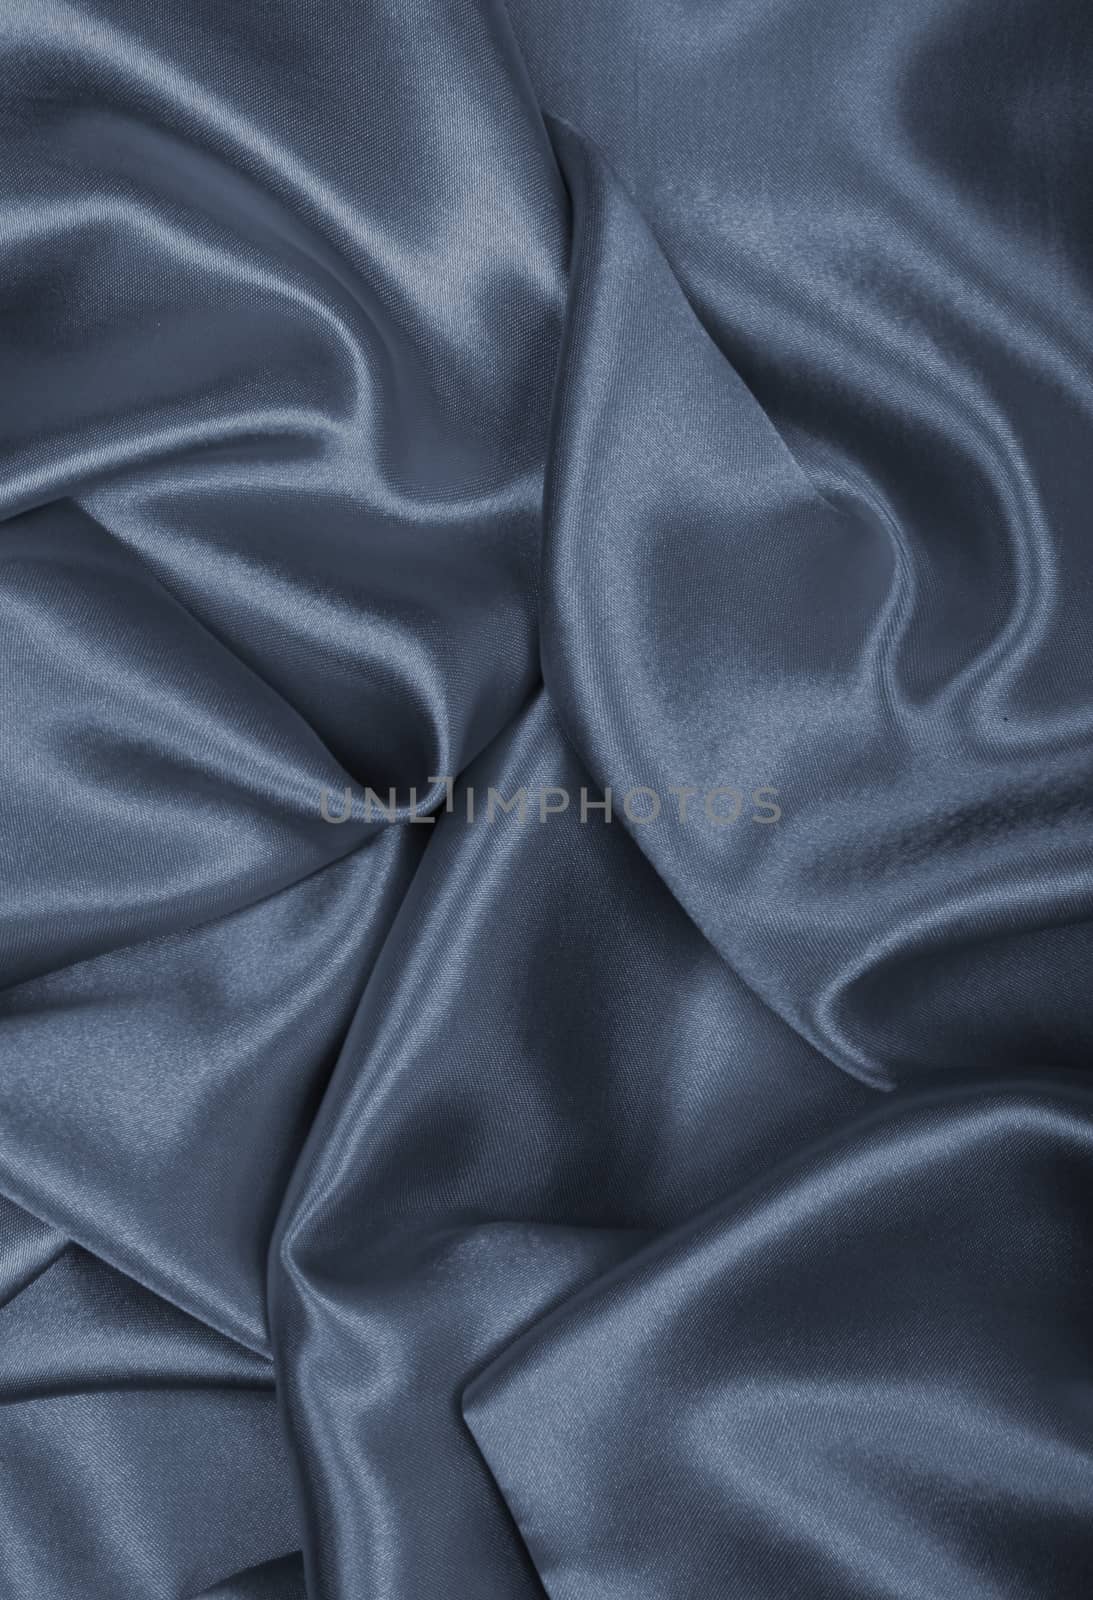 Smooth elegant grey silk or satin as background by oxanatravel